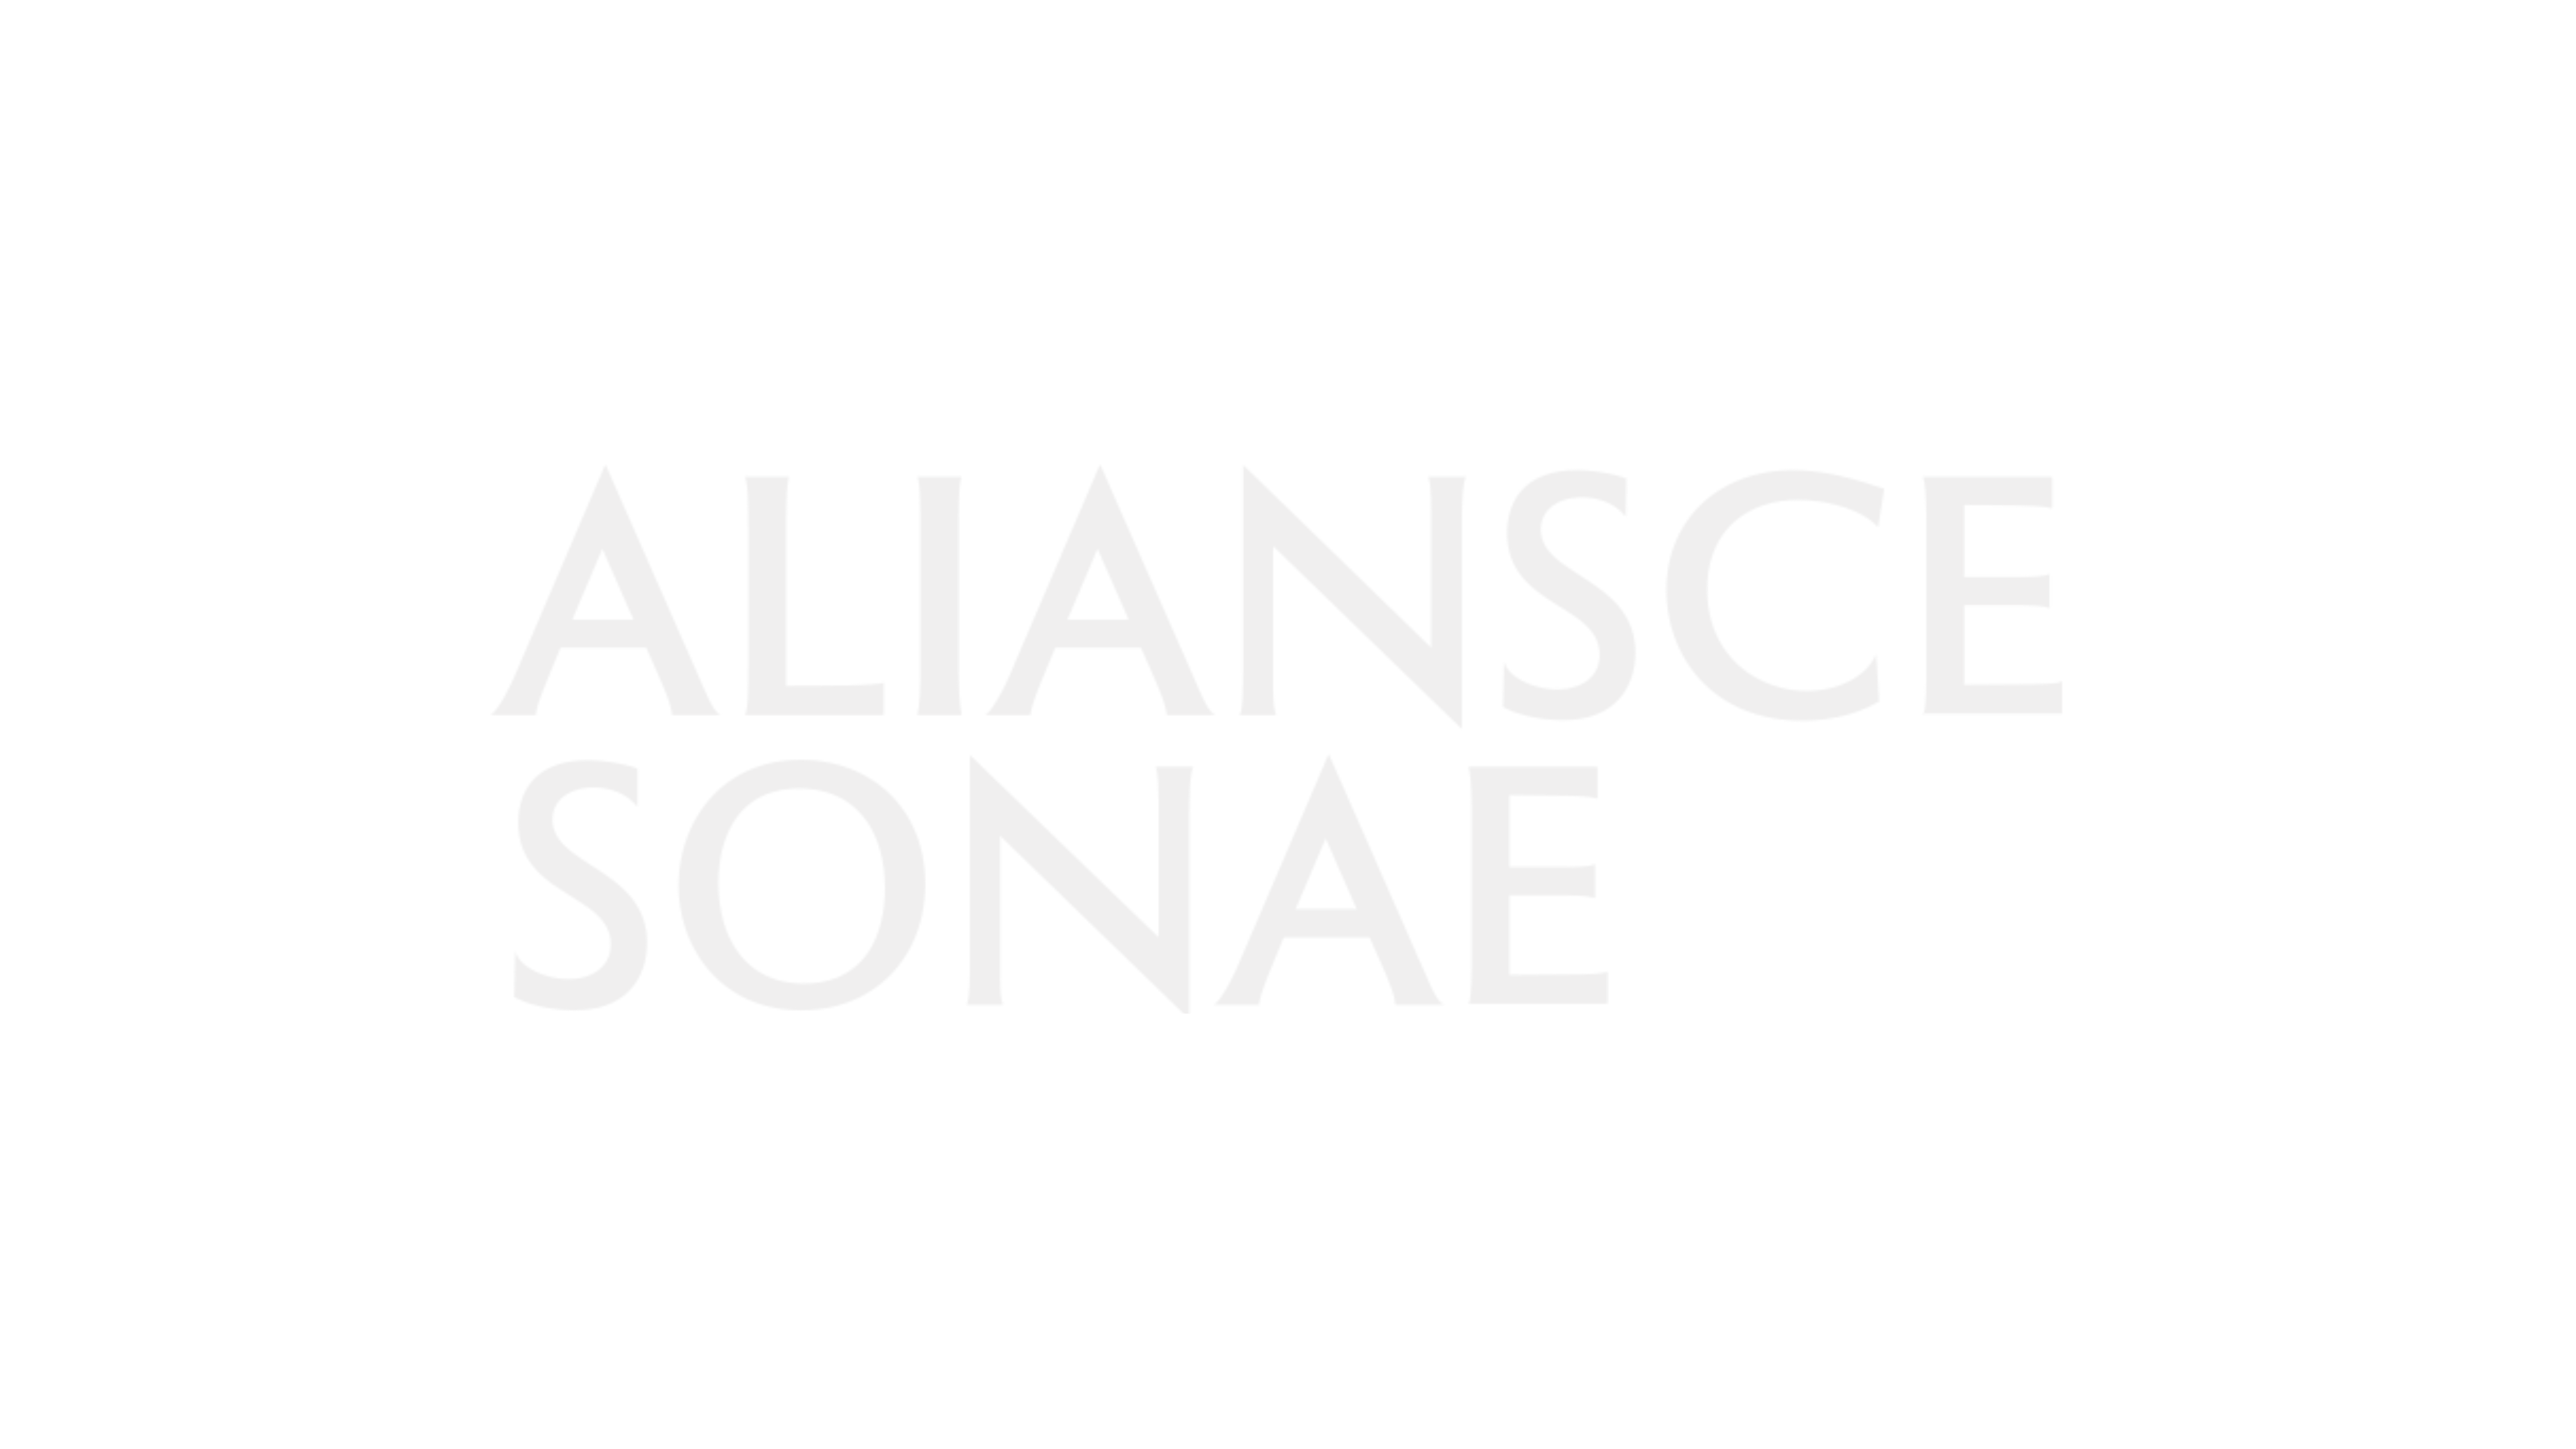 aliansce sonae